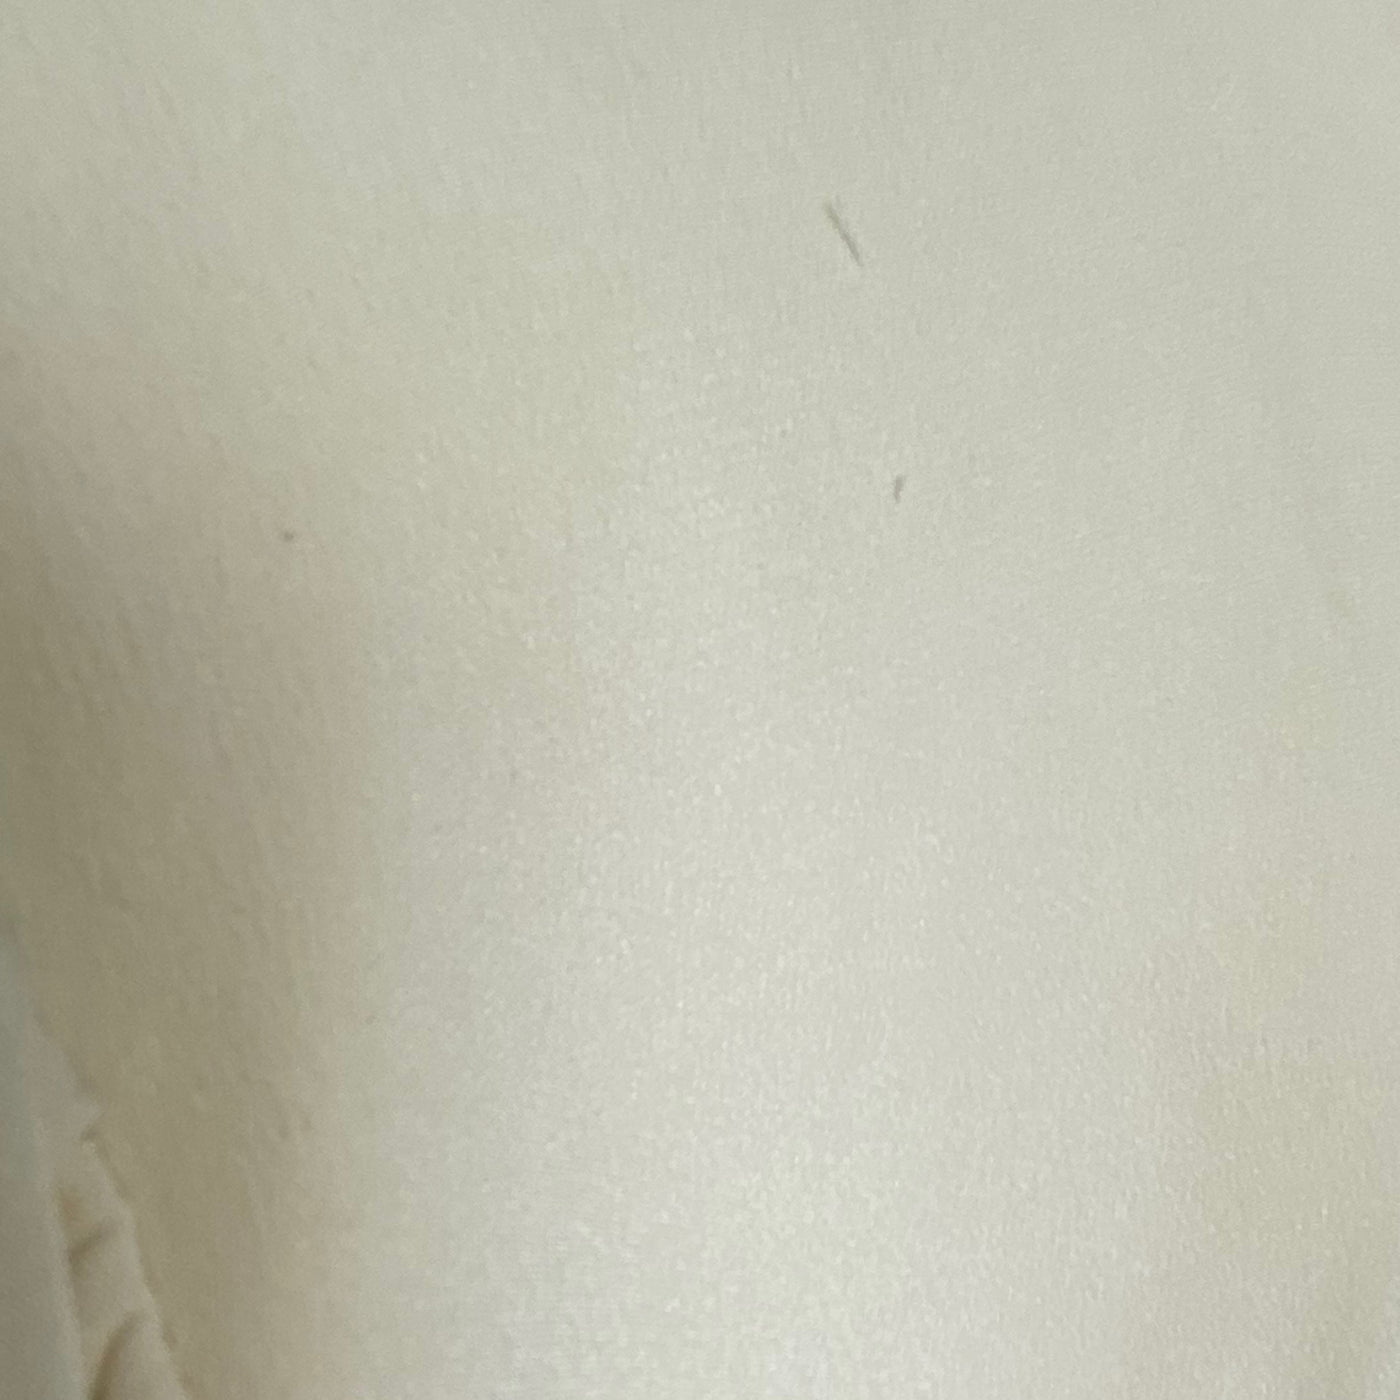 Studio Heijne silk blouse, cream | woman 38